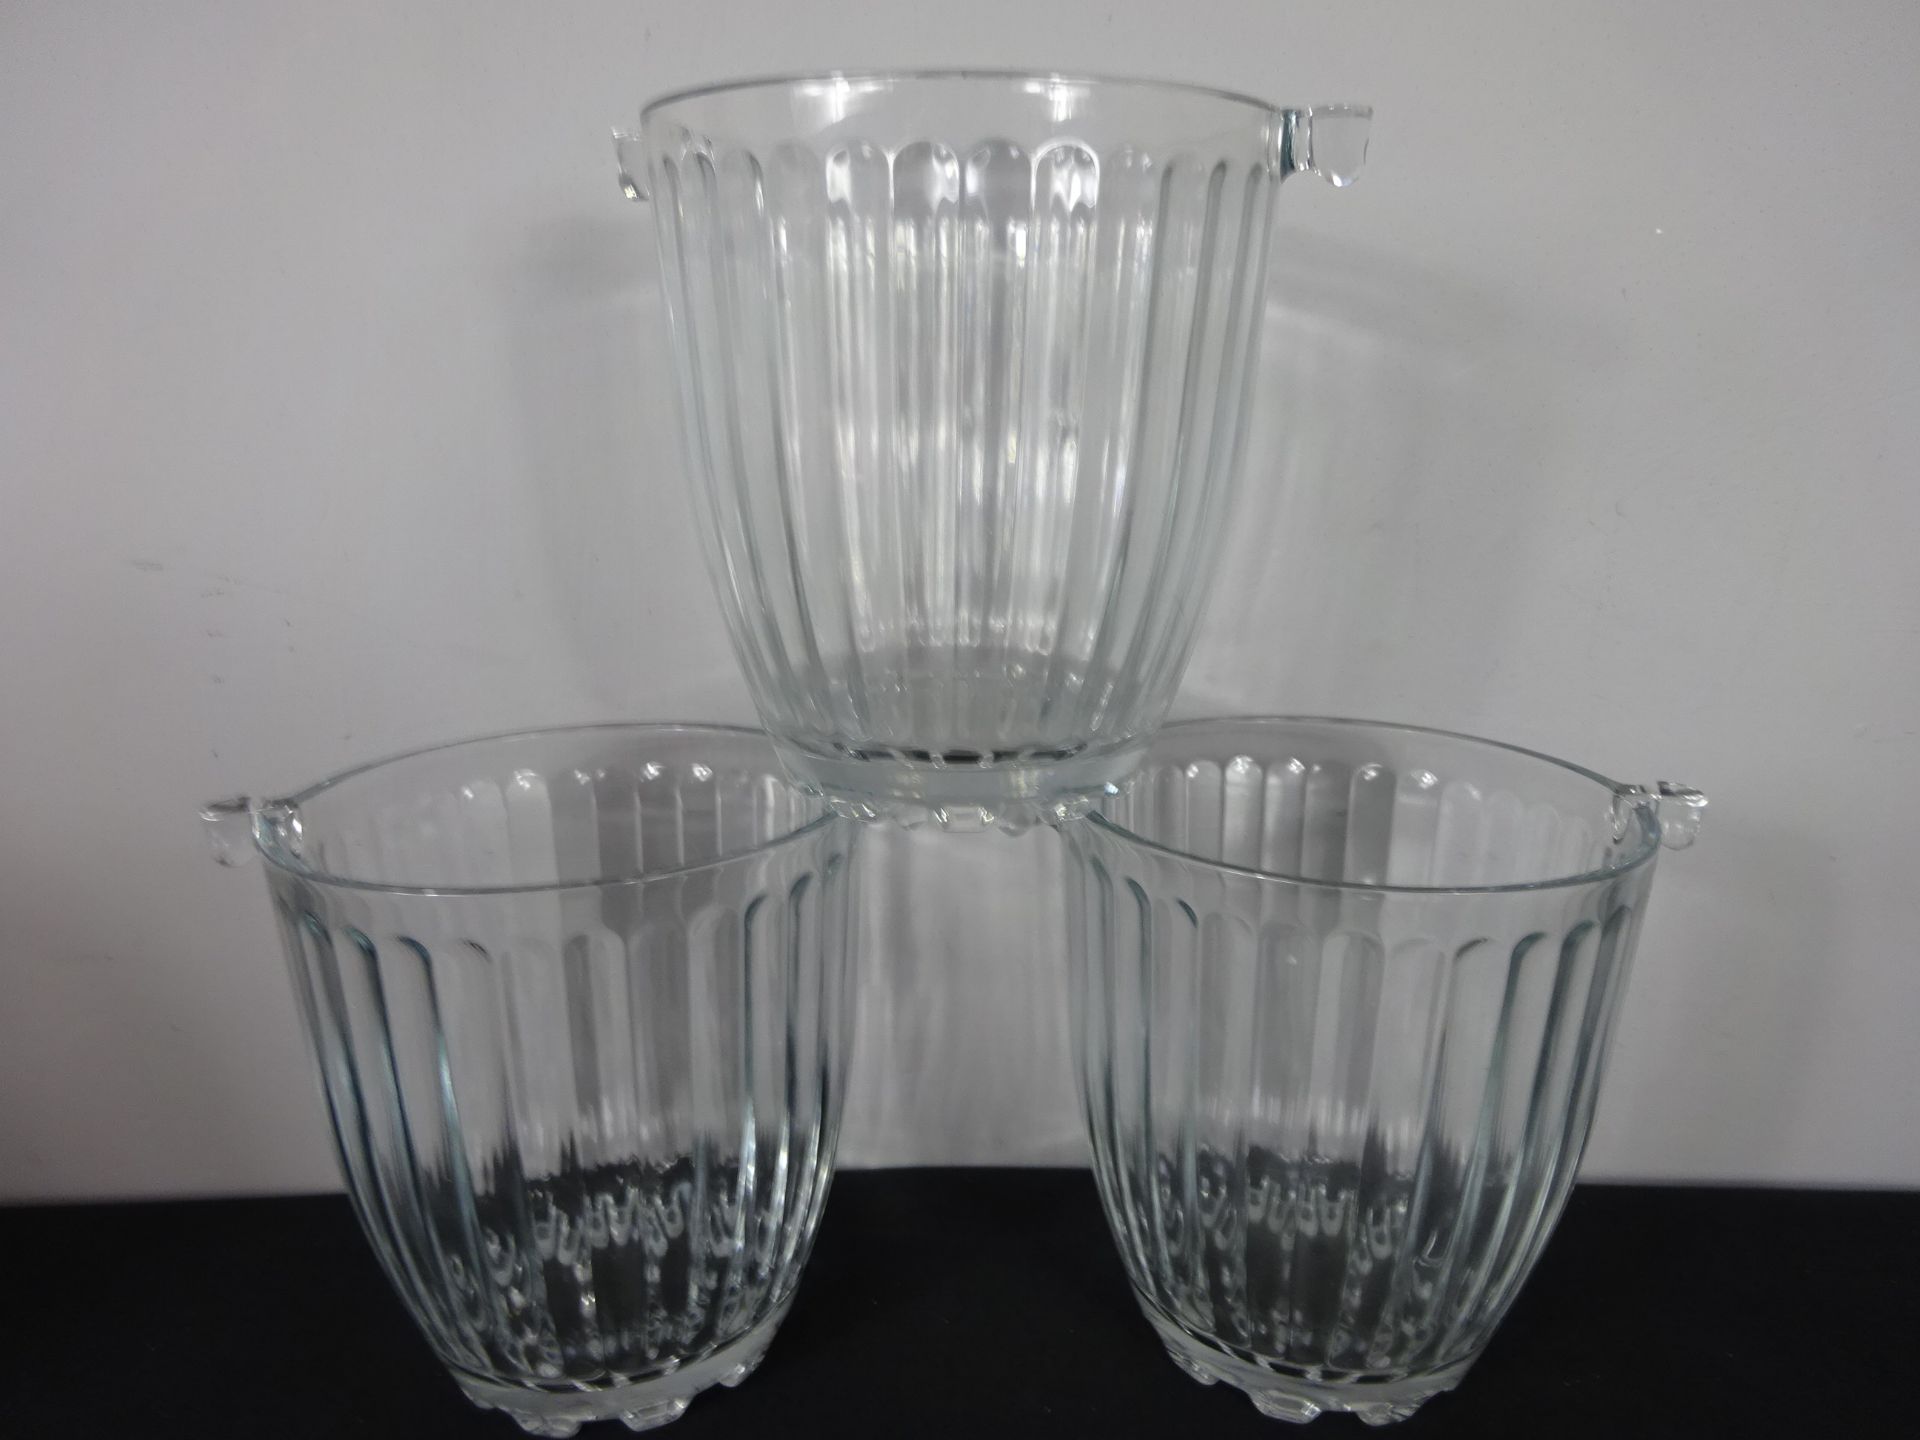 x3 New Glass Ice Buckets